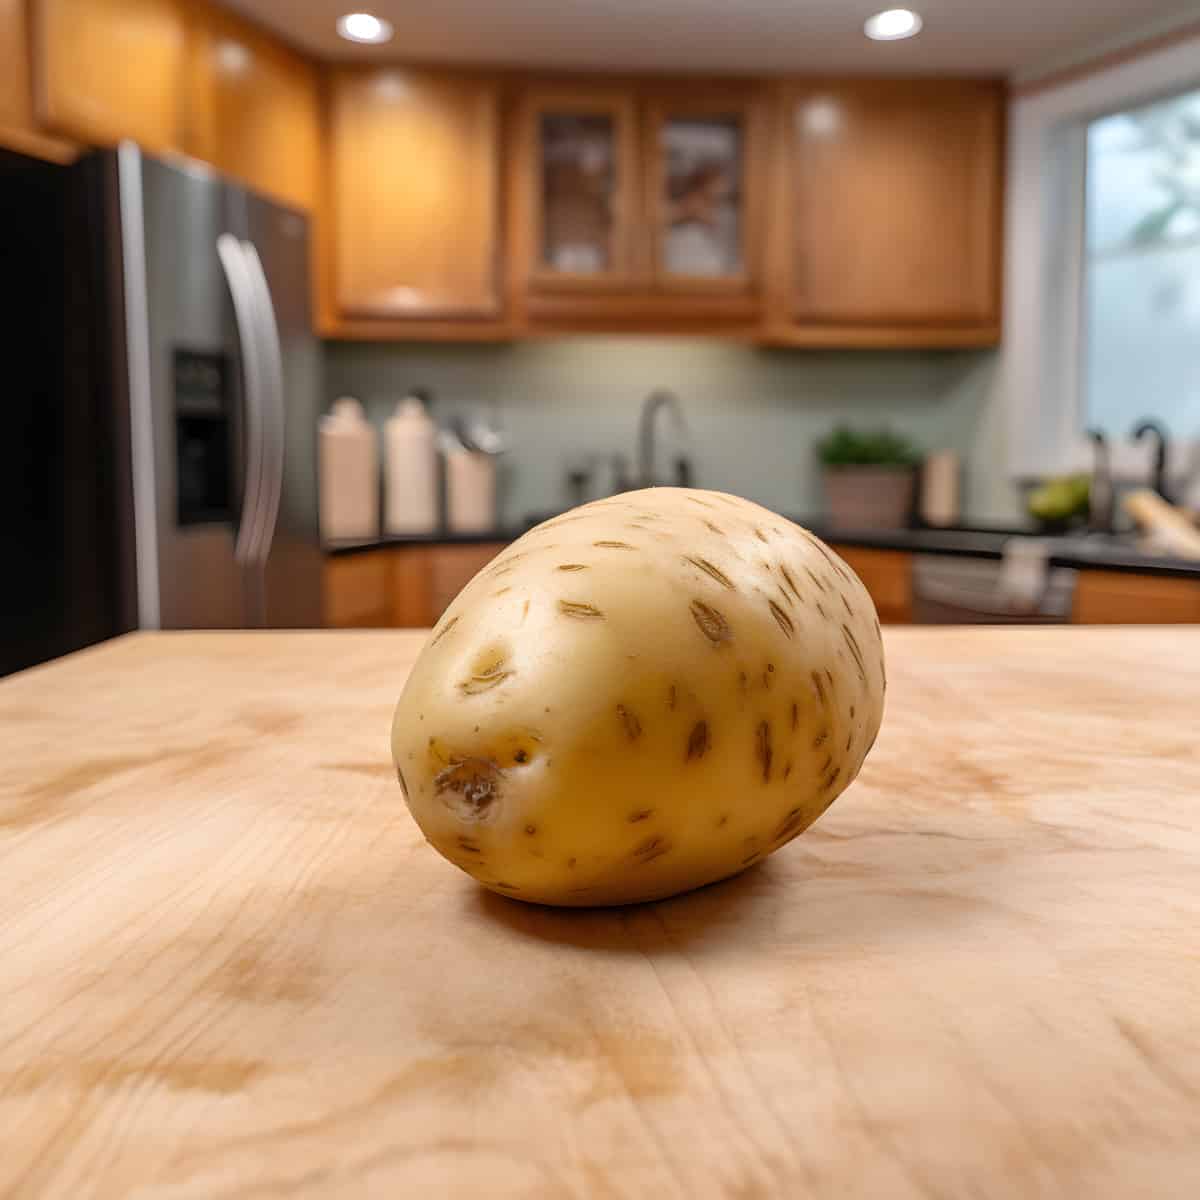 Warba Potatoes on a kitchen counter